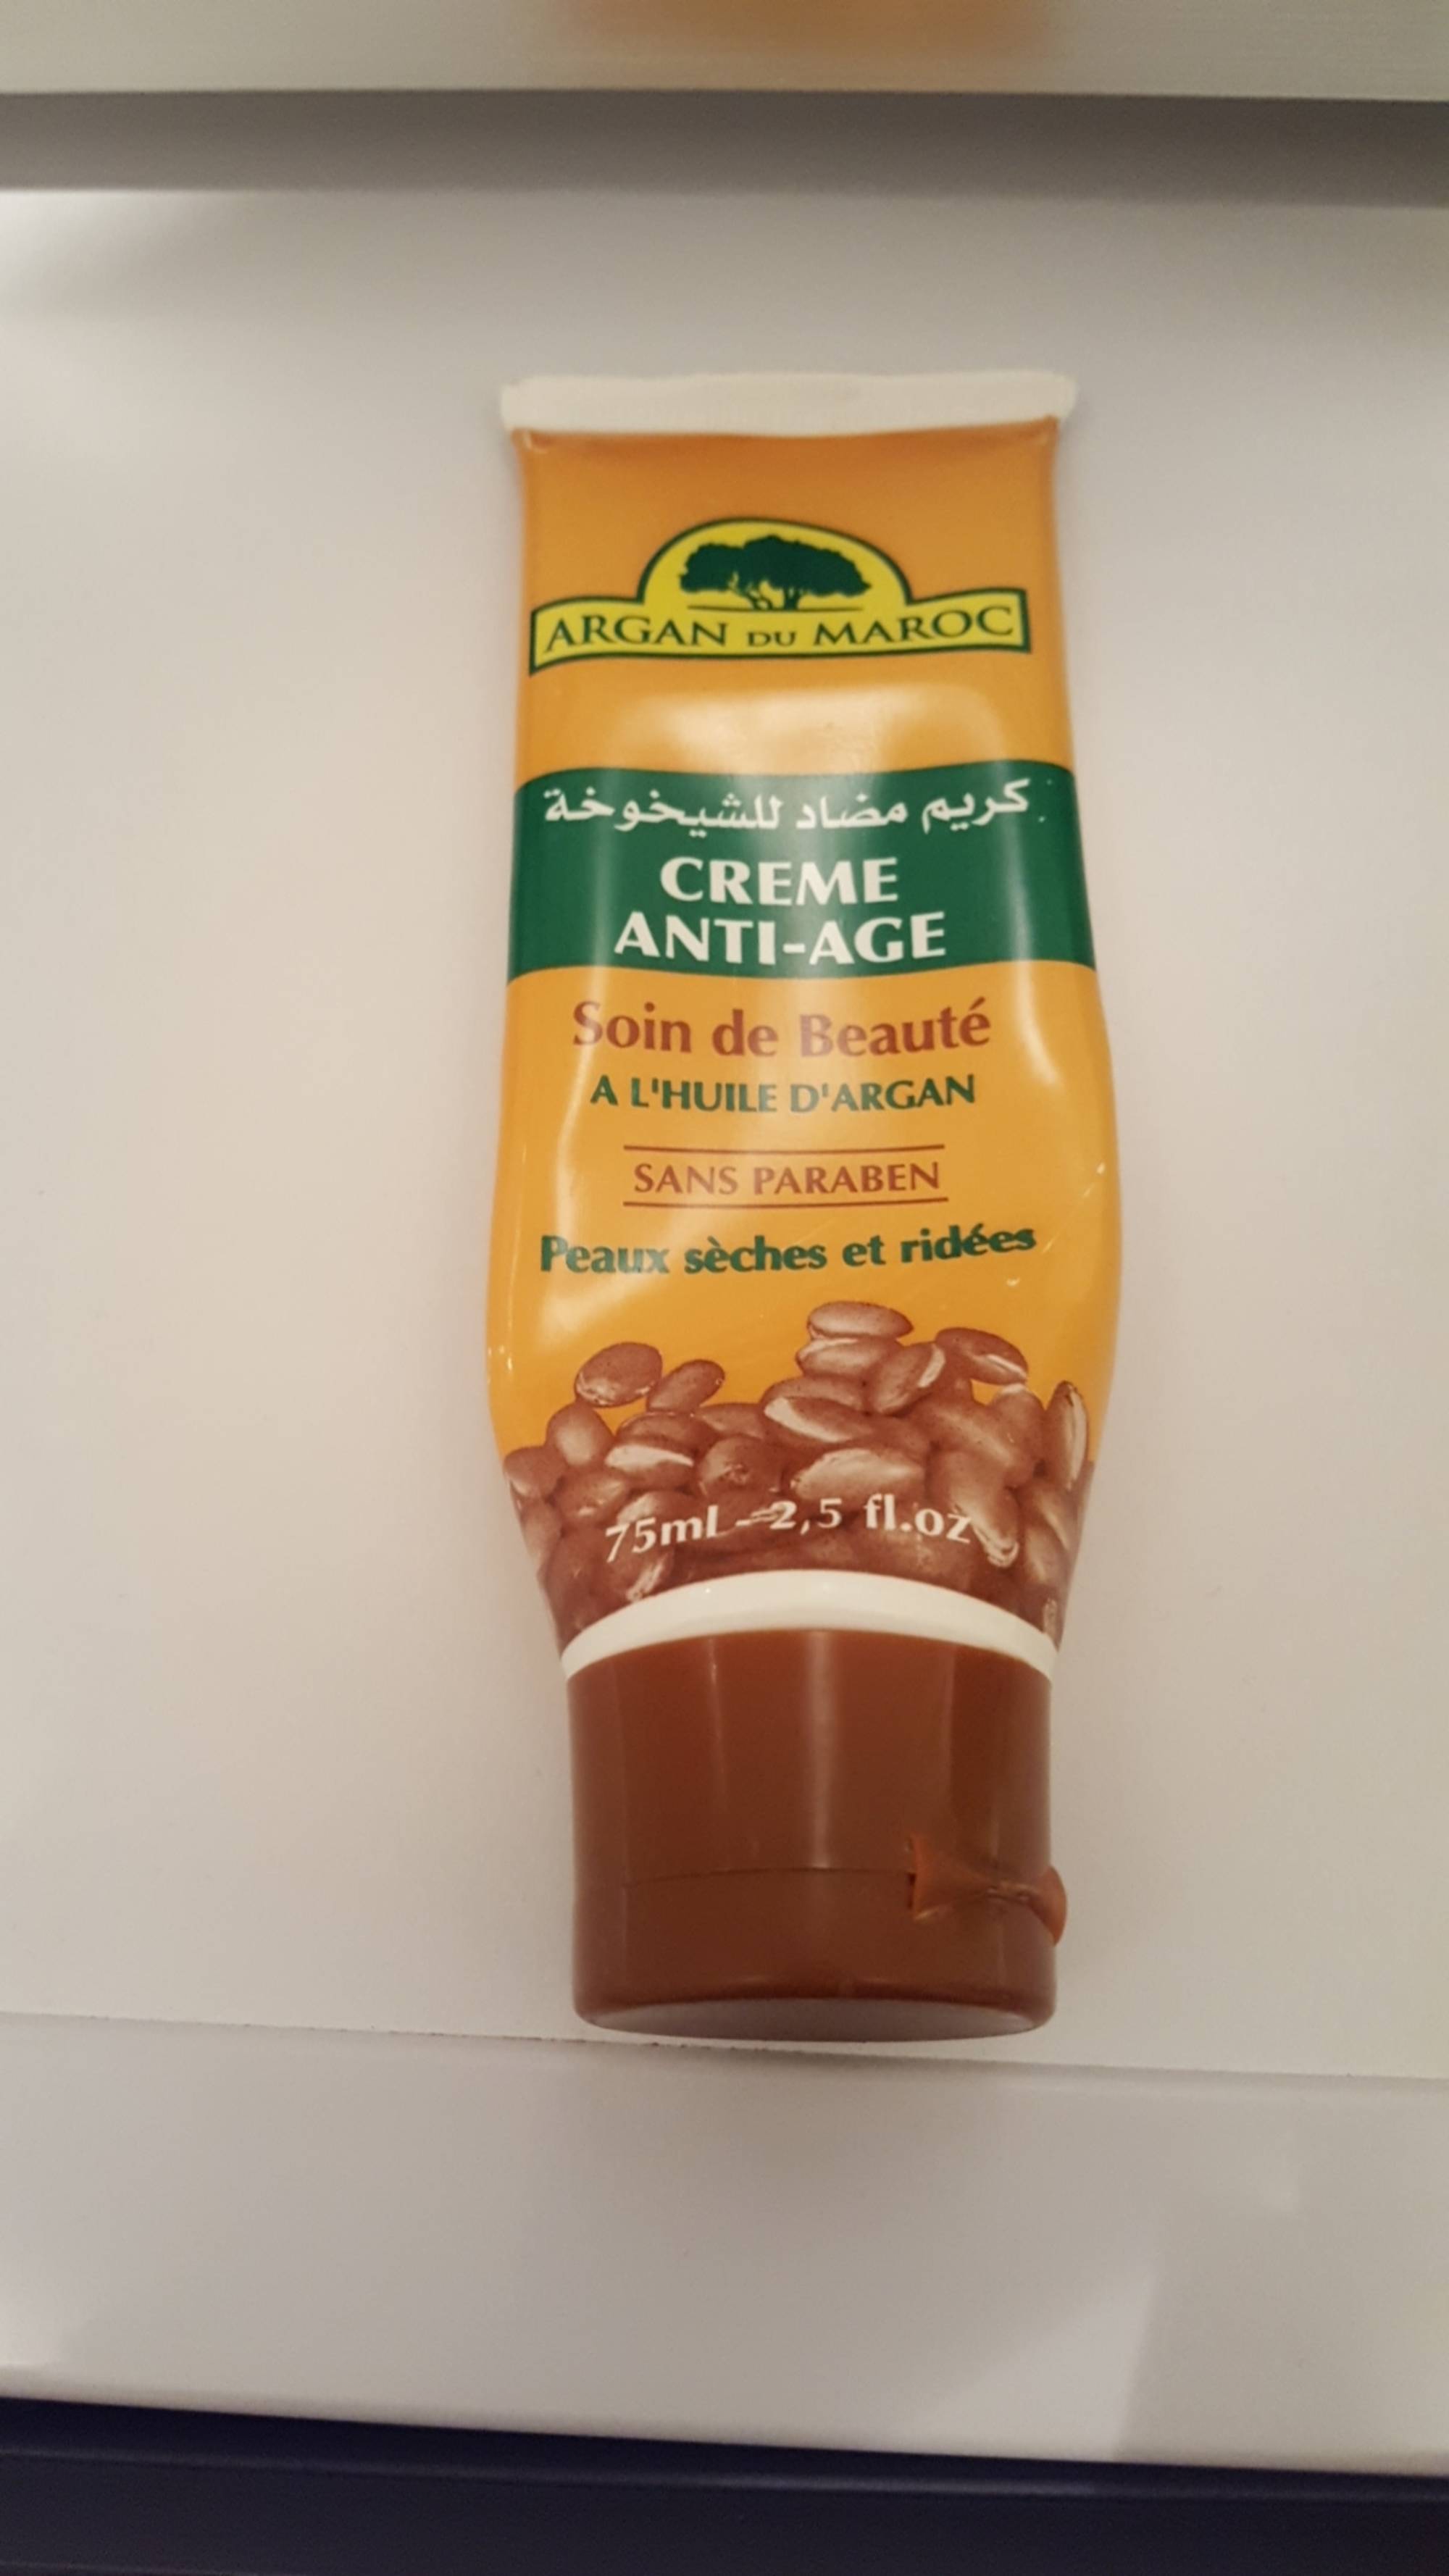 ARGAN DU MAROC - Crème anti-âge